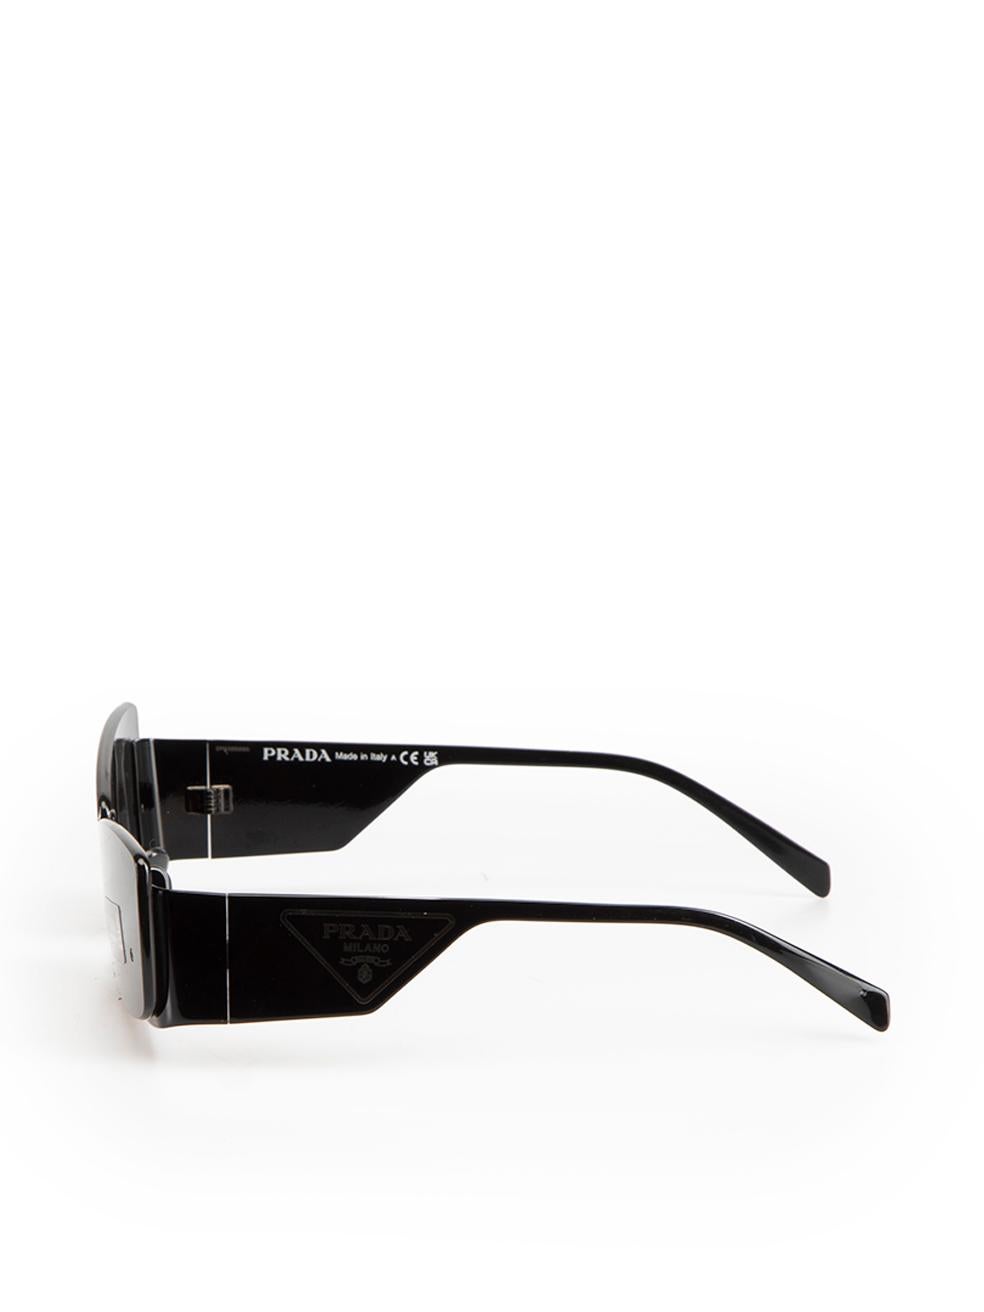 Prada Women's Black Runway Rectangle Sunglasses 1